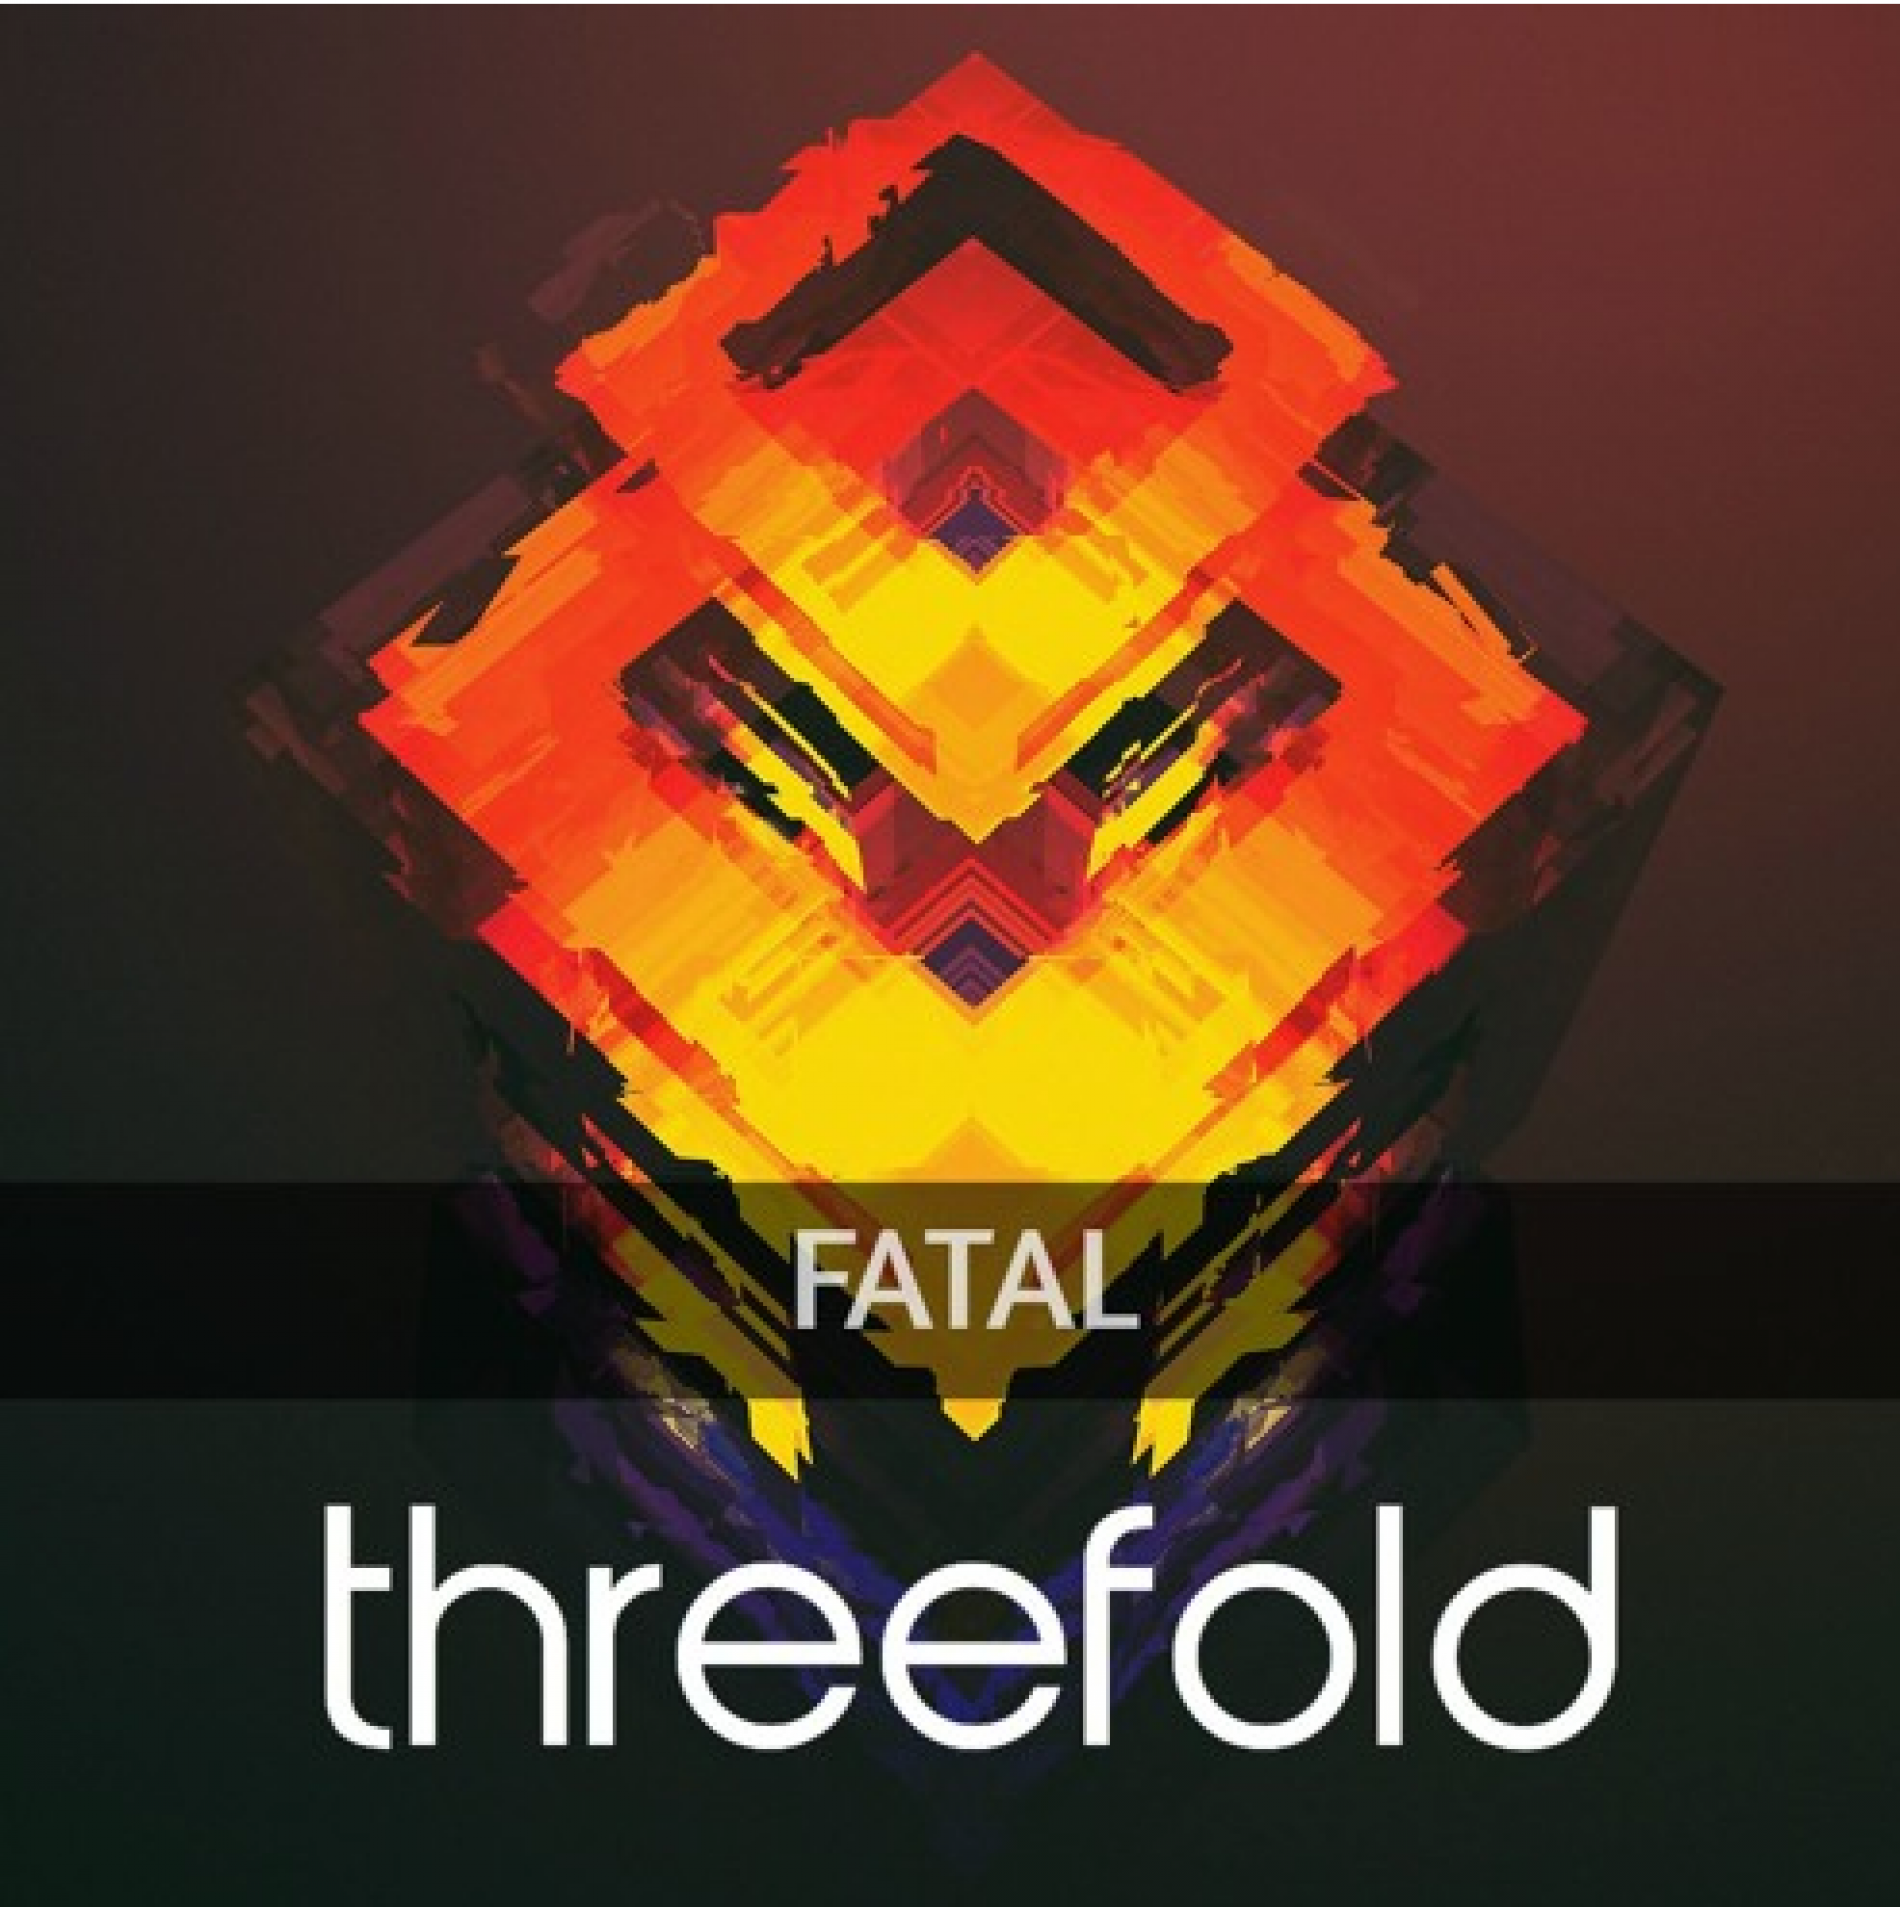 FATAL – threefold